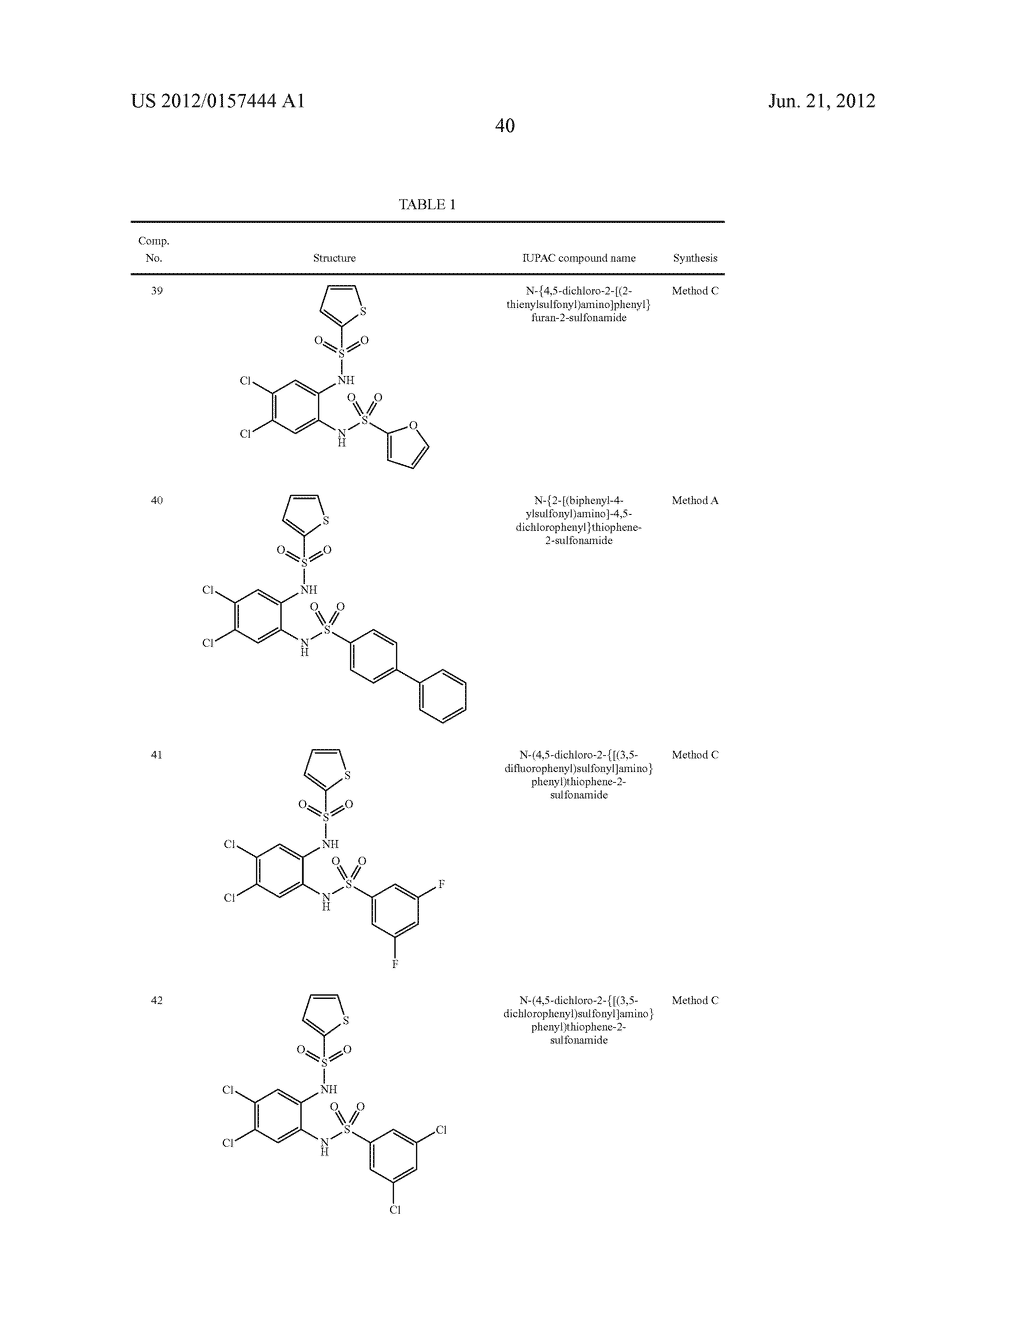 NOVEL 1,2- BIS-SULFONAMIDE DERIVATIVES AS CHEMOKINE RECEPTOR MODULATORS - diagram, schematic, and image 41